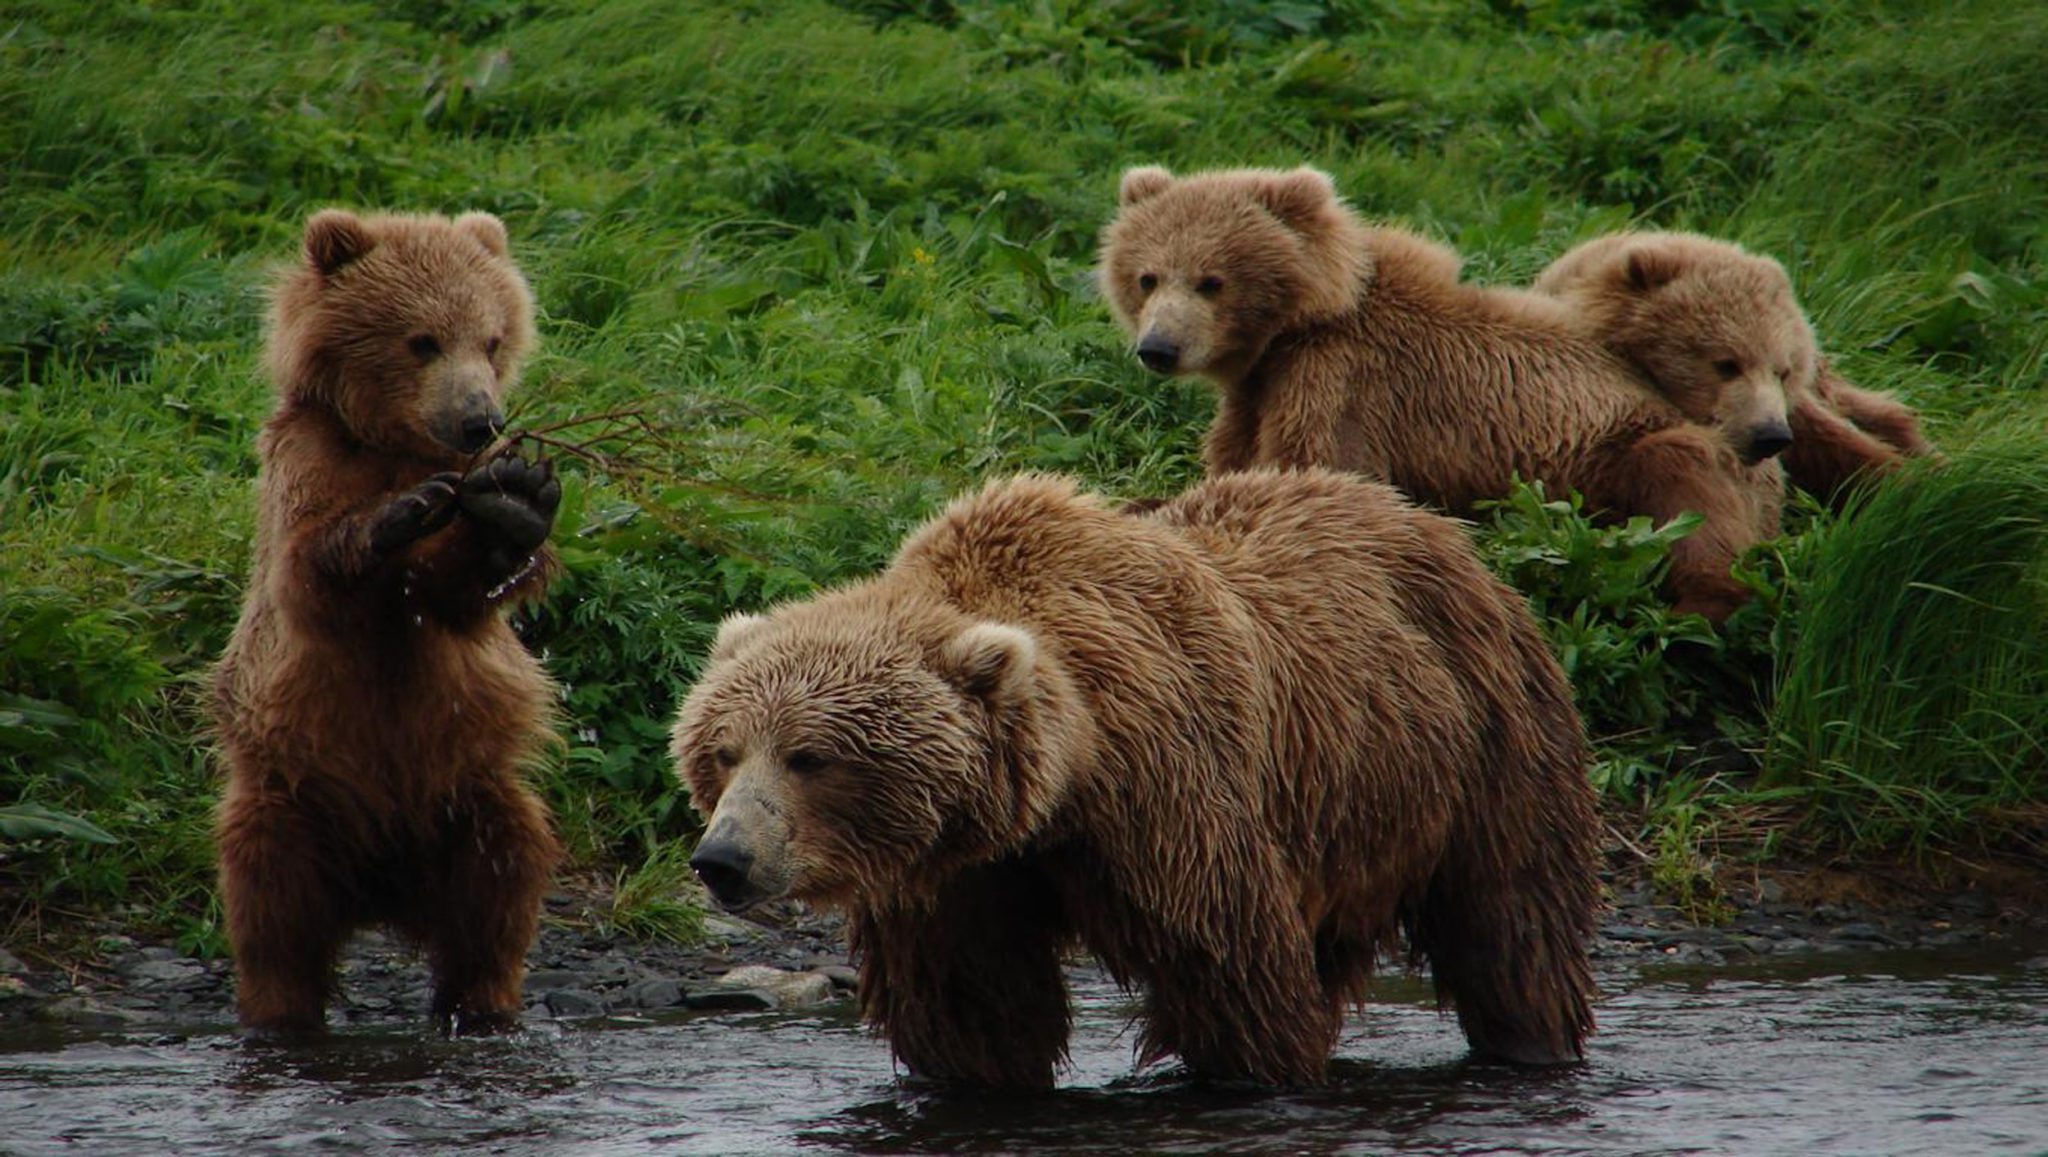 The-Bears-2-1.jpg